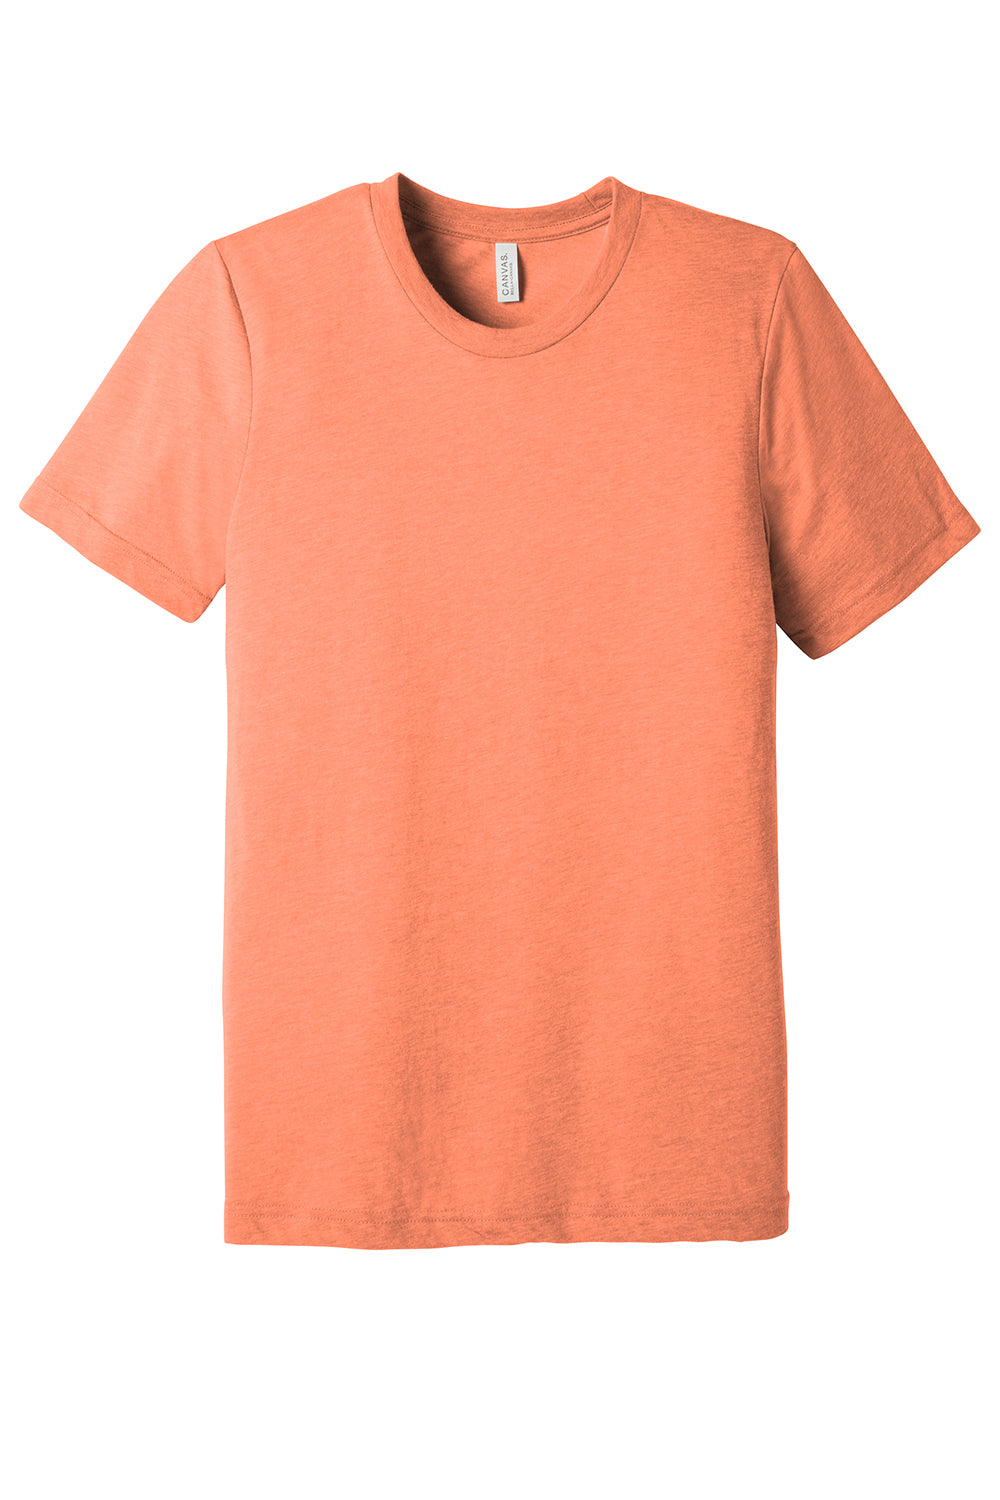 Bella + Canvas BC3413/3413C/3413 Mens Short Sleeve Crewneck T-Shirt Orange Flat Front